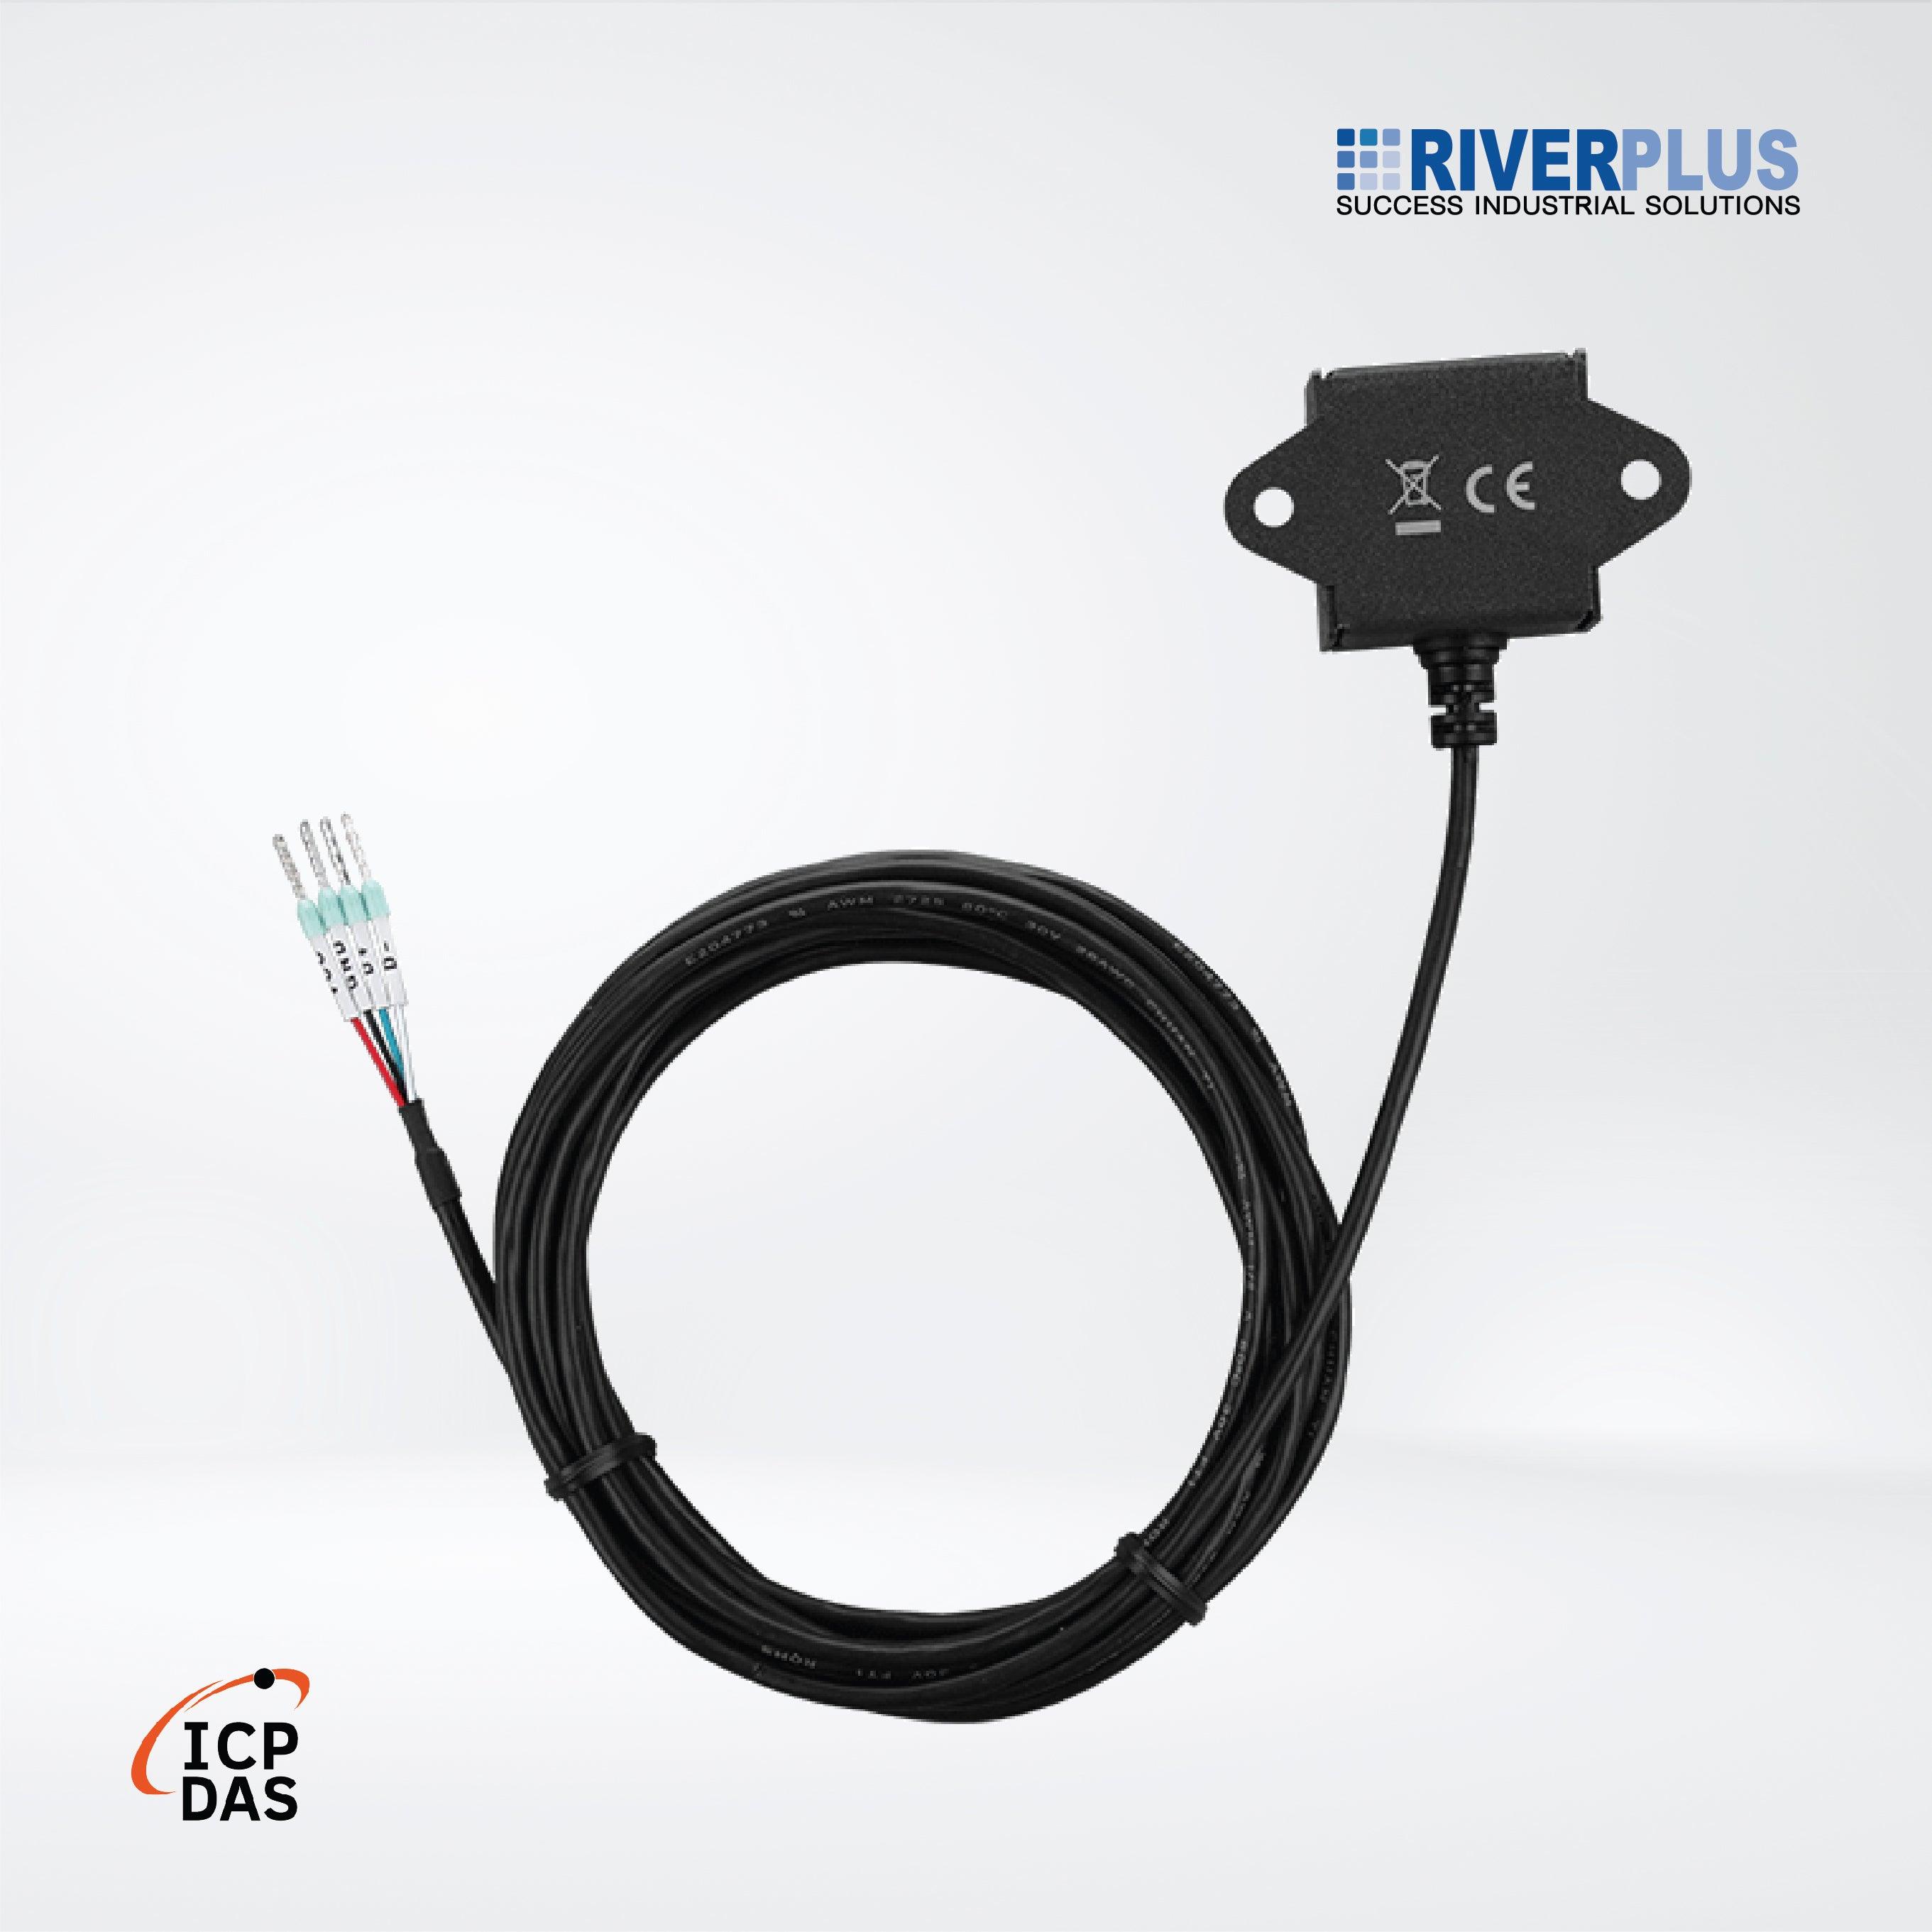 iSN-713-MRTU Three-axis vibration sensor module (RS-485) - Riverplus